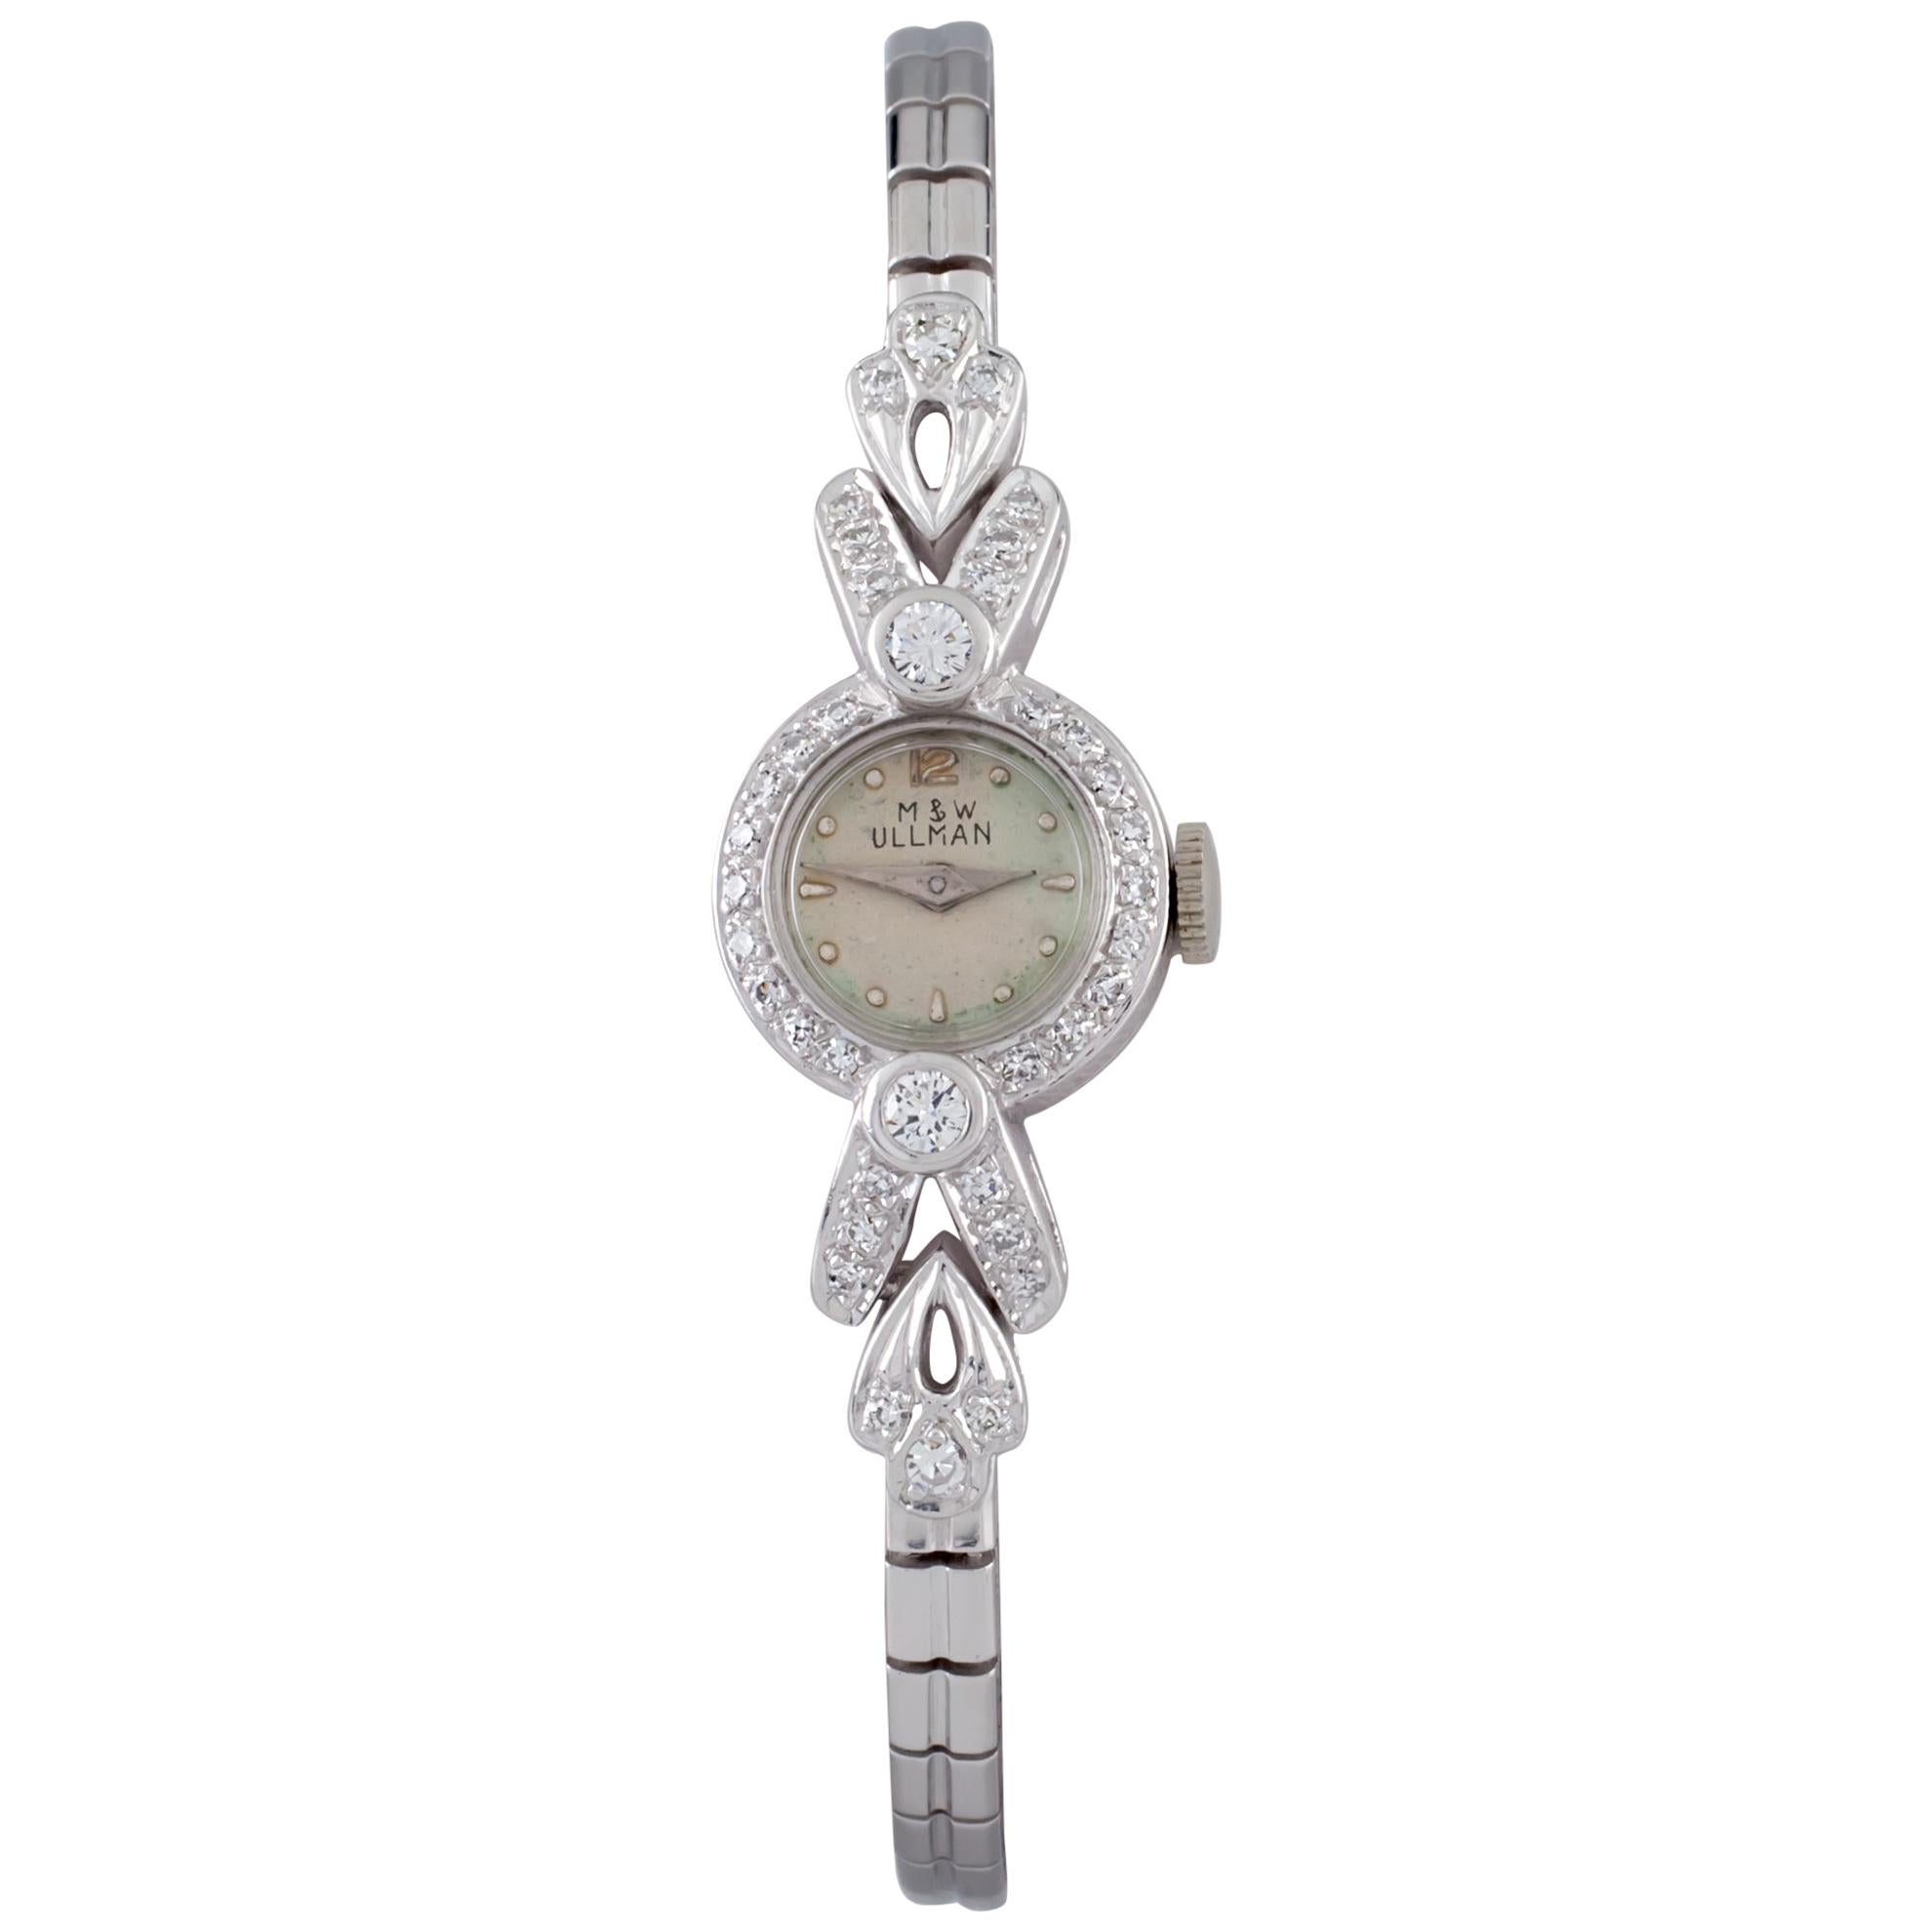 M&W Ullman Platinum Hand-Winding Women's Dress Watch with Diamonds For Sale